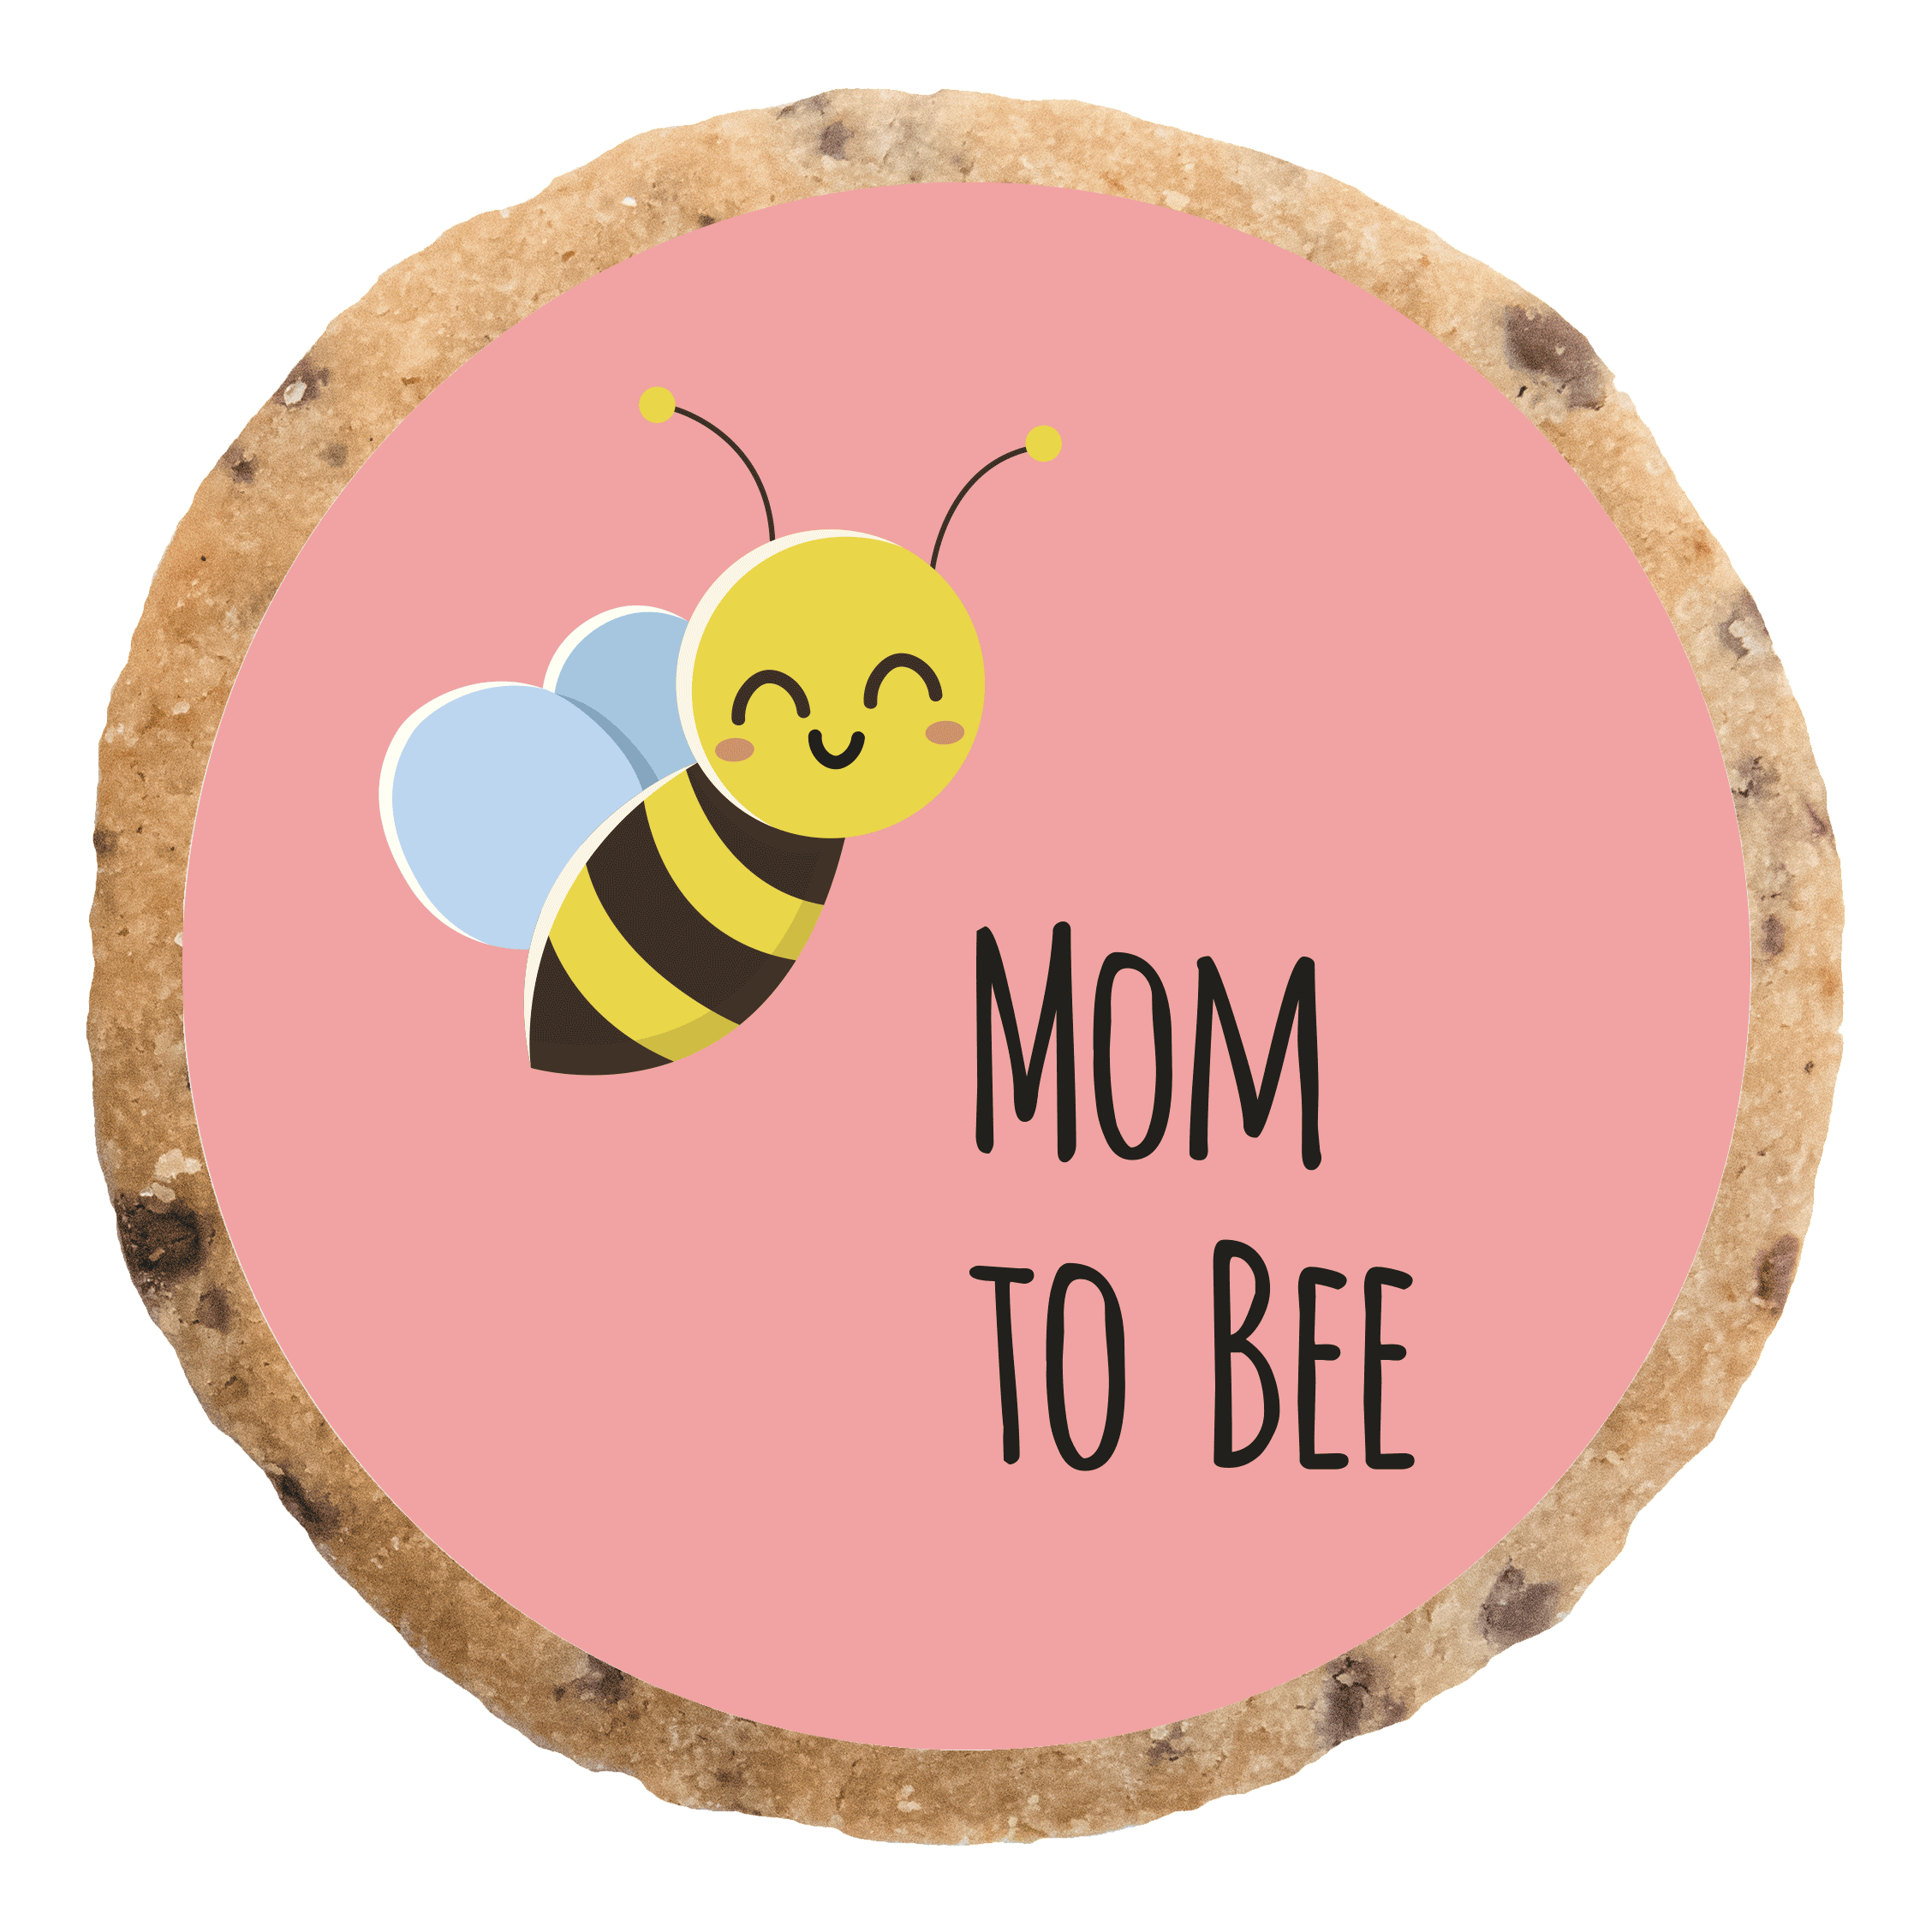 "Mom to bee" MotivKEKS